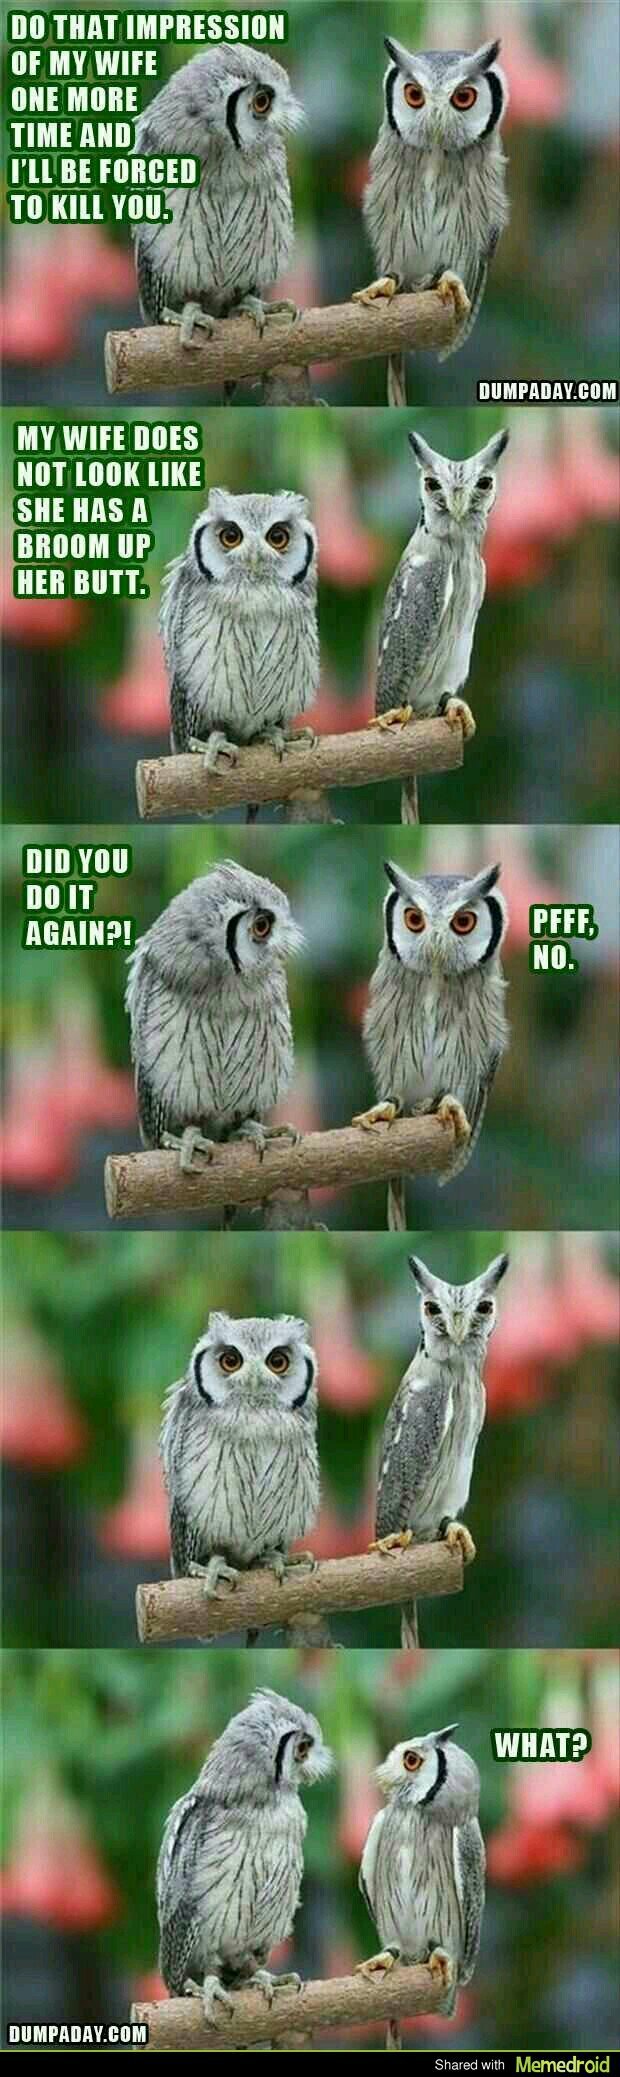 Owl - meme